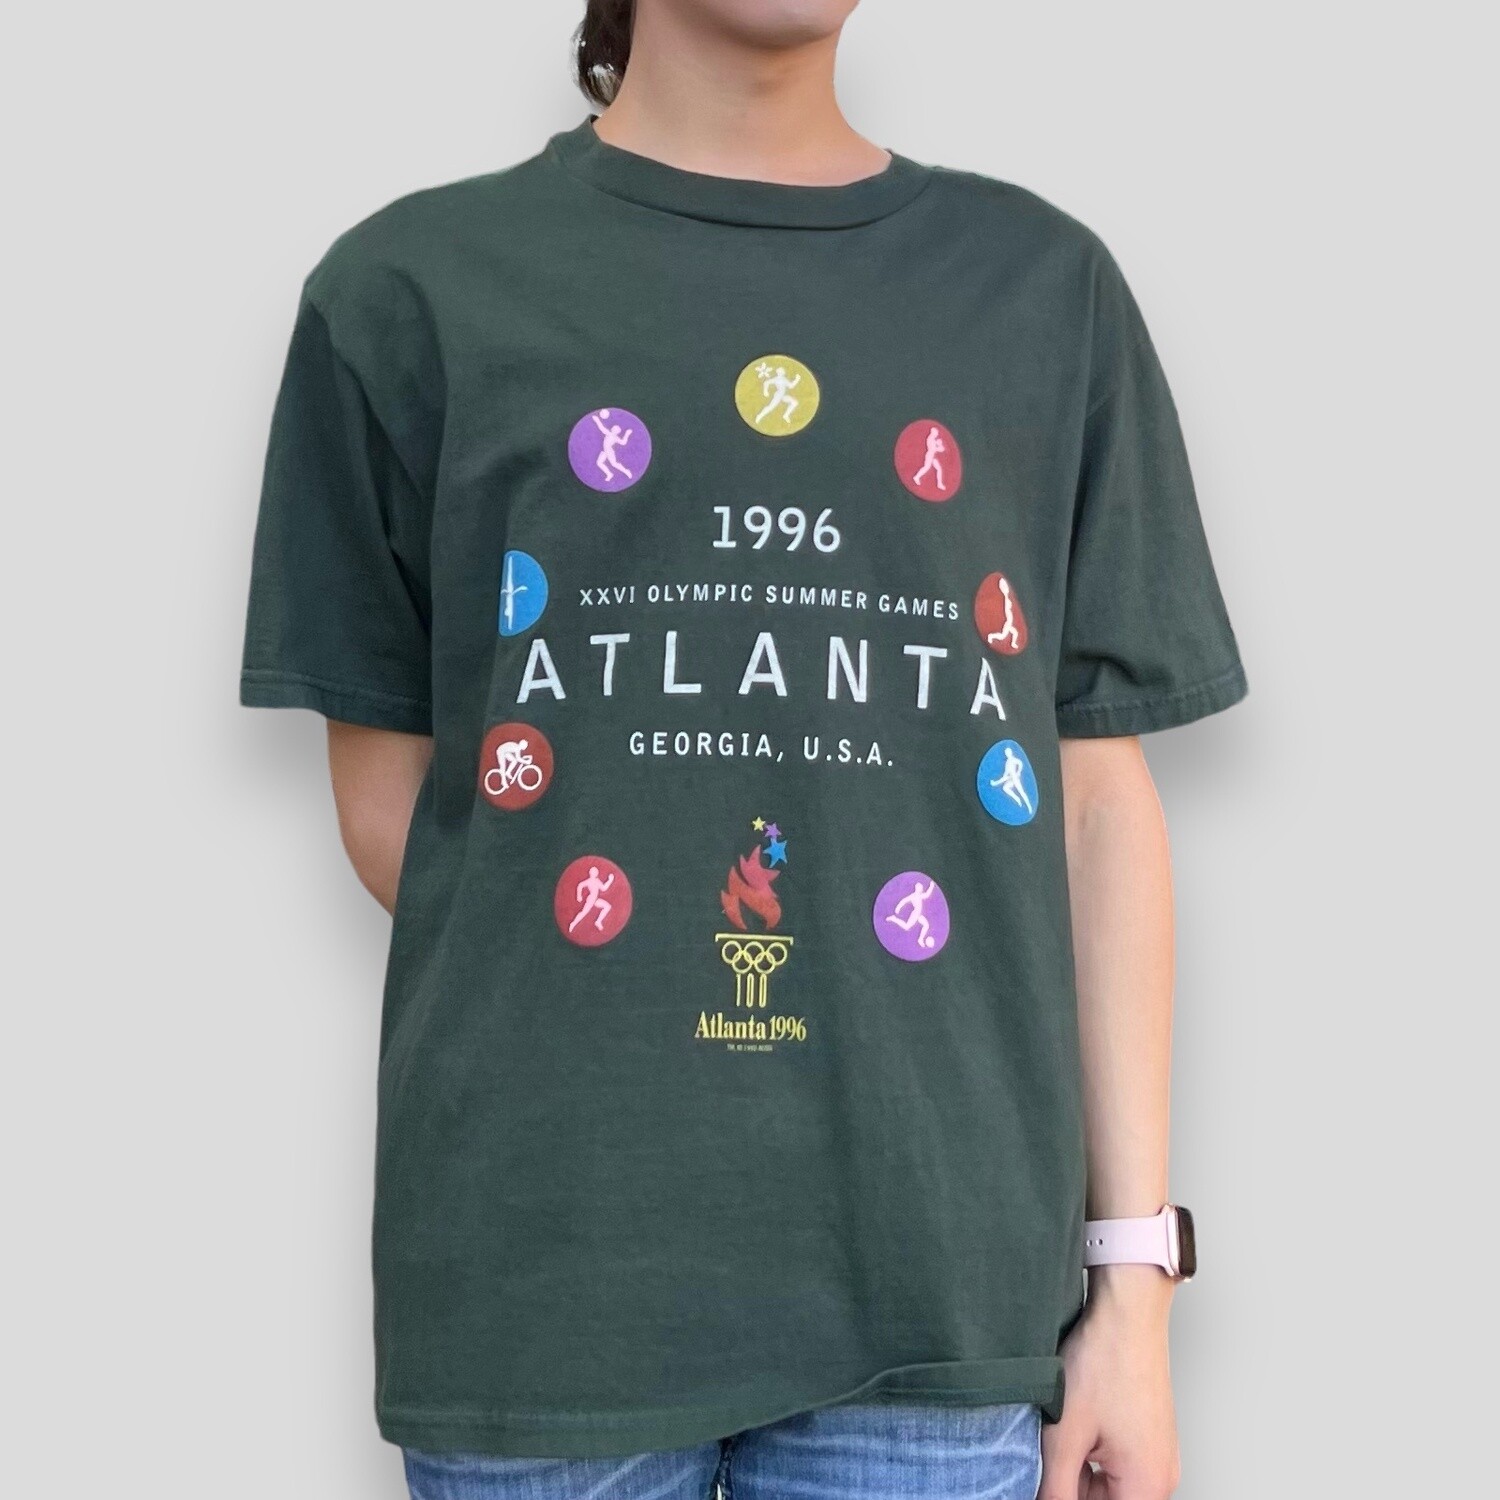 Vintage Atlanta Georgia Olympics Tee, Size: Large, Color: Green, Style: Sports